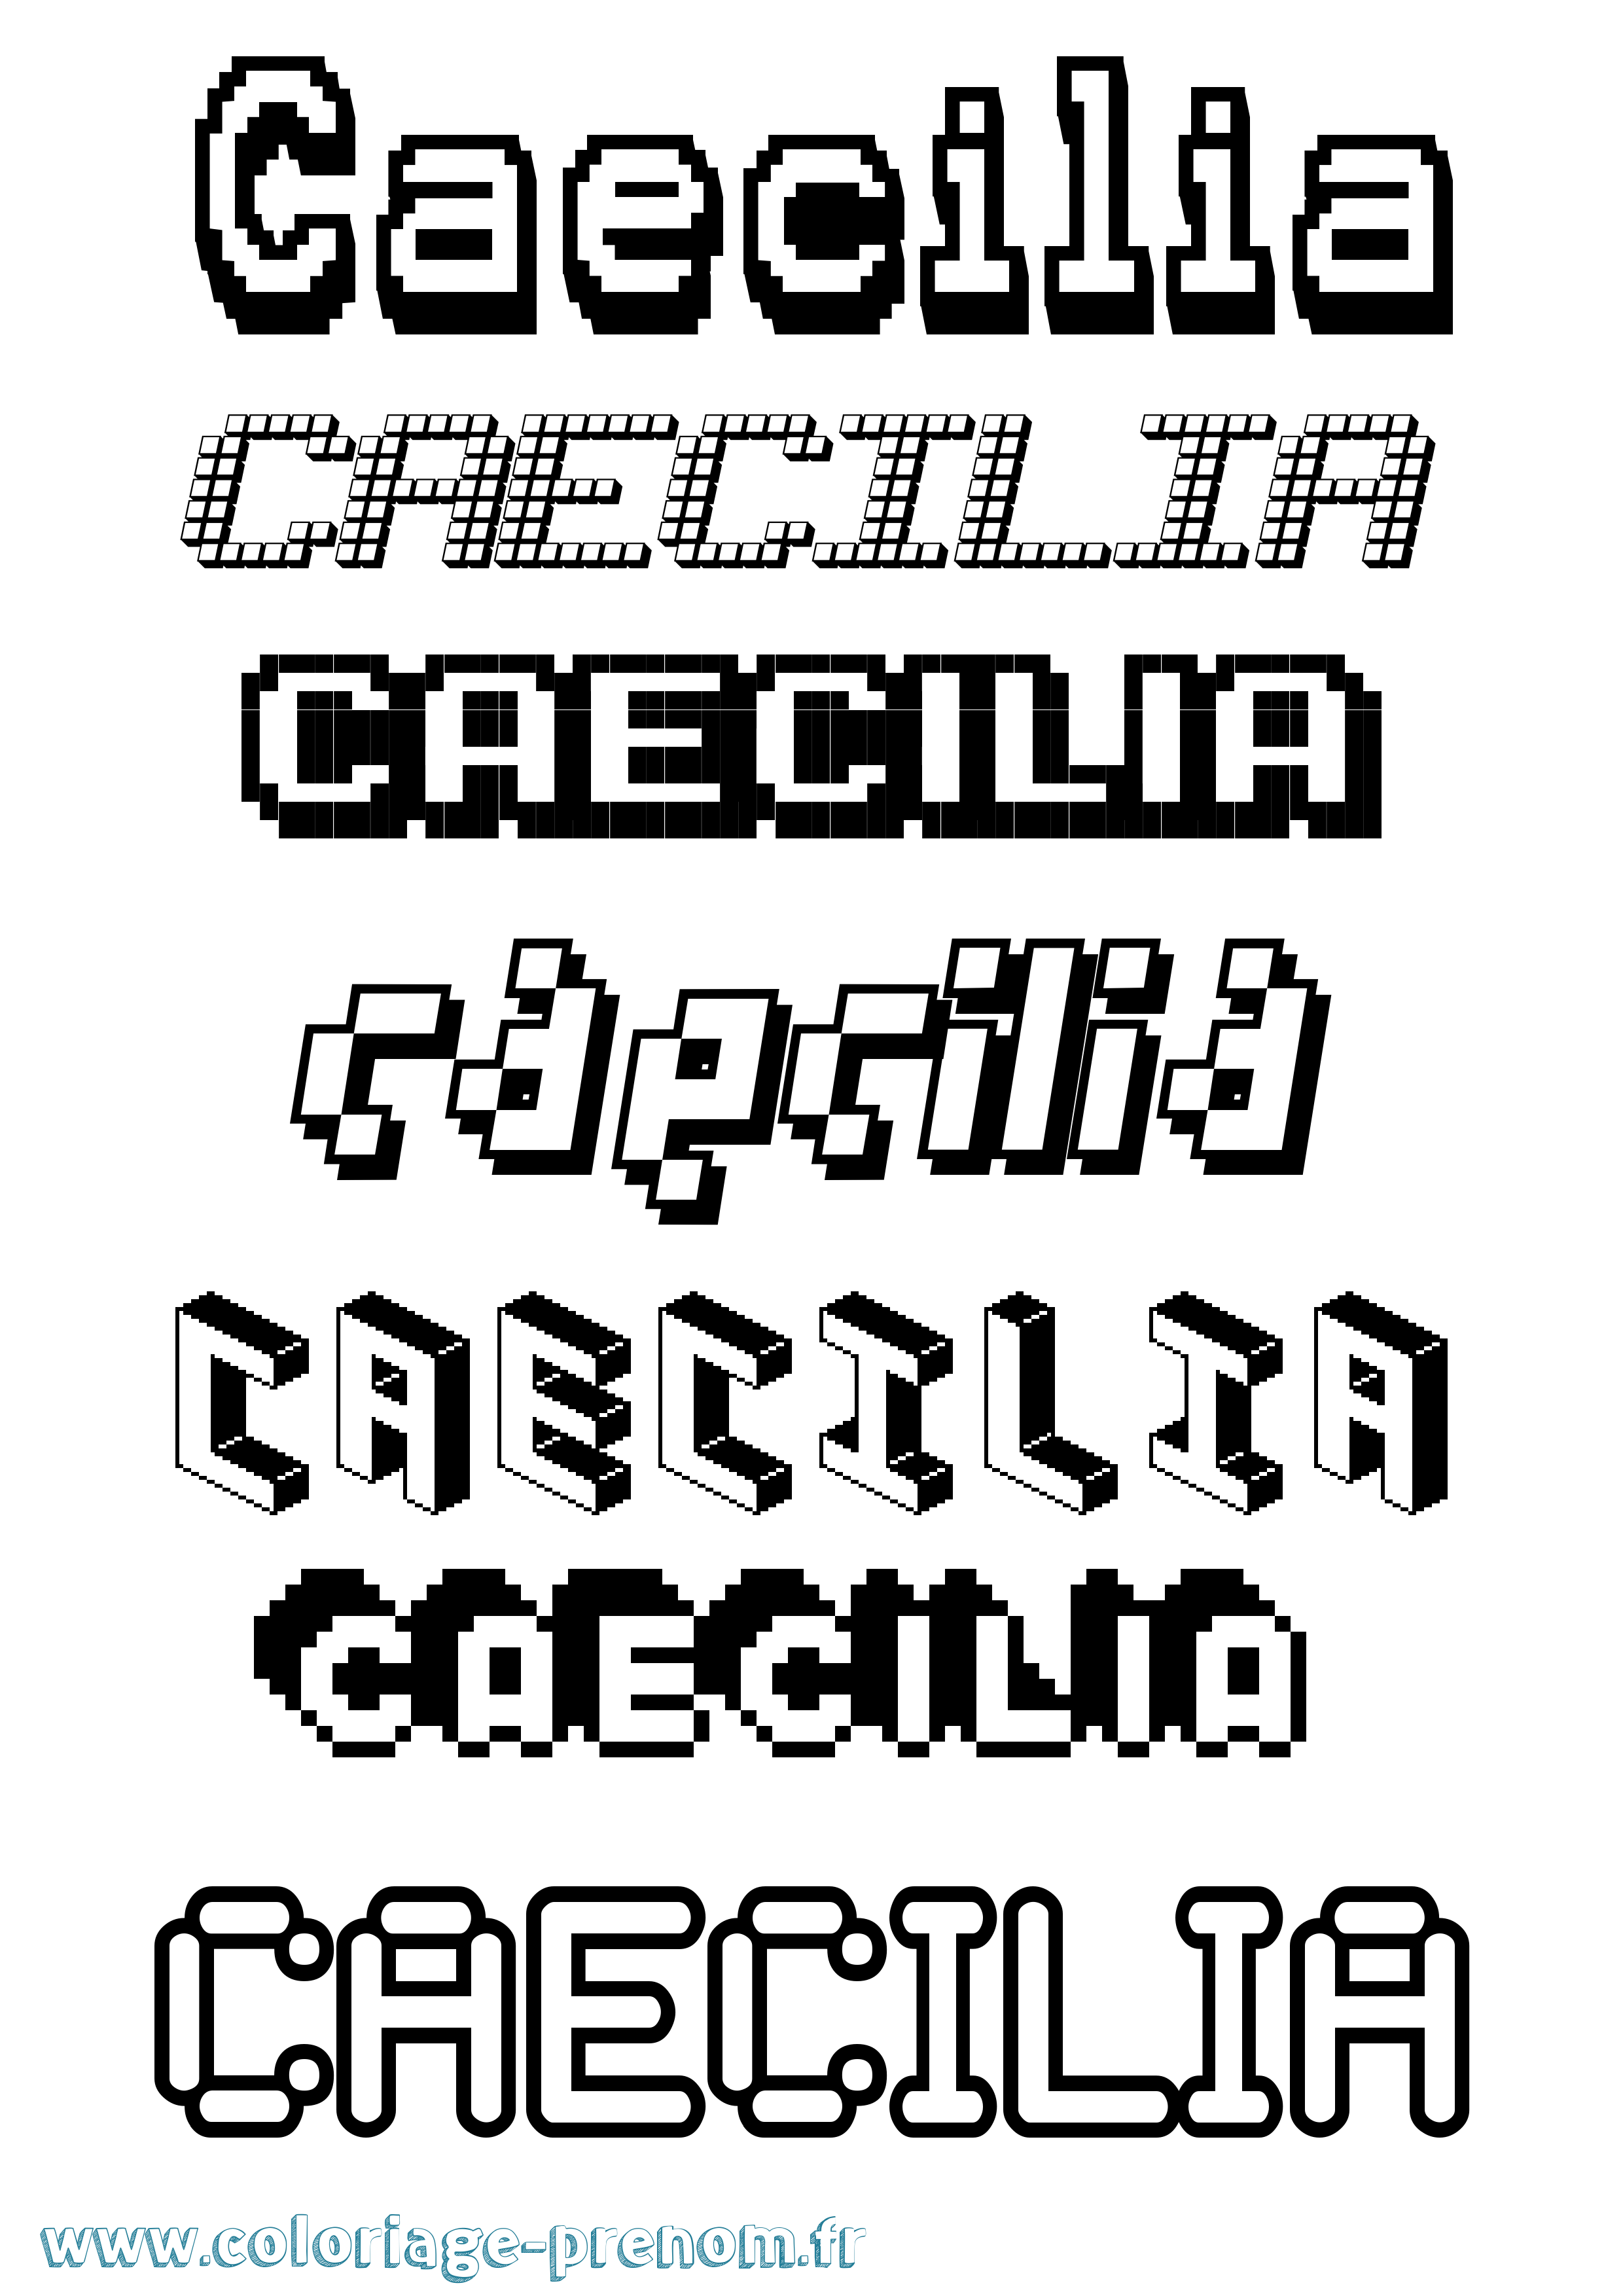 Coloriage prénom Caecilia Pixel